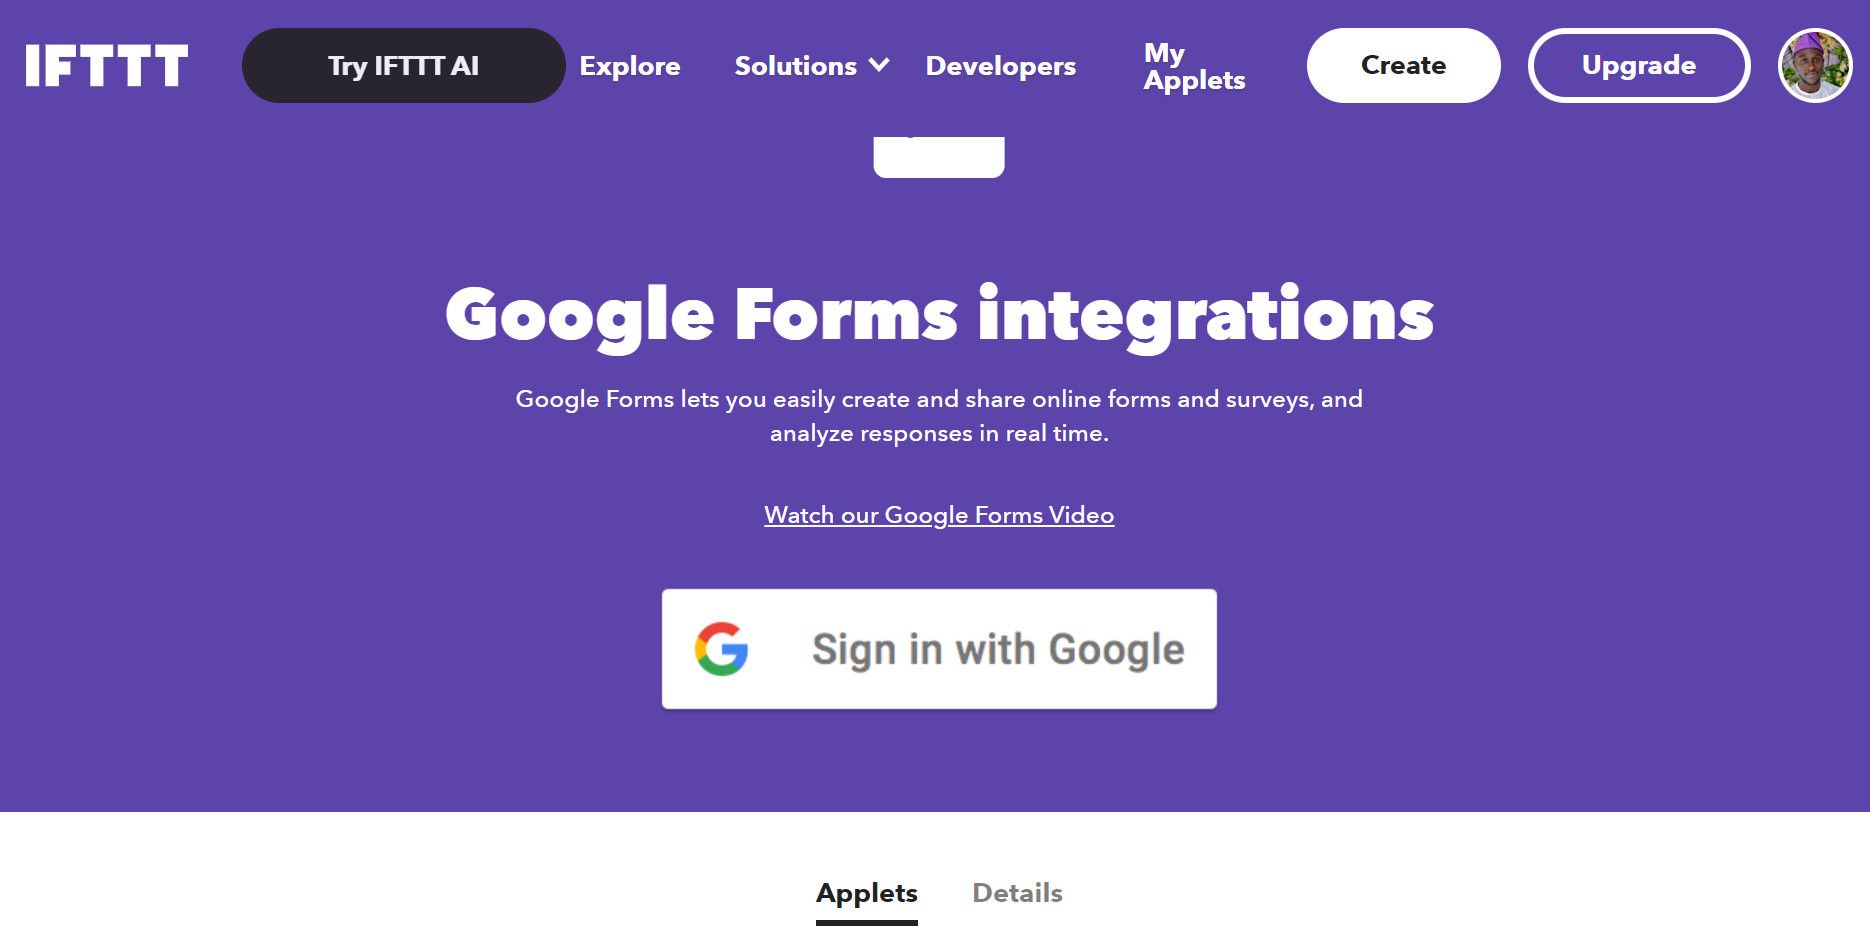 صفحه ادغام IFTTT Google Forms